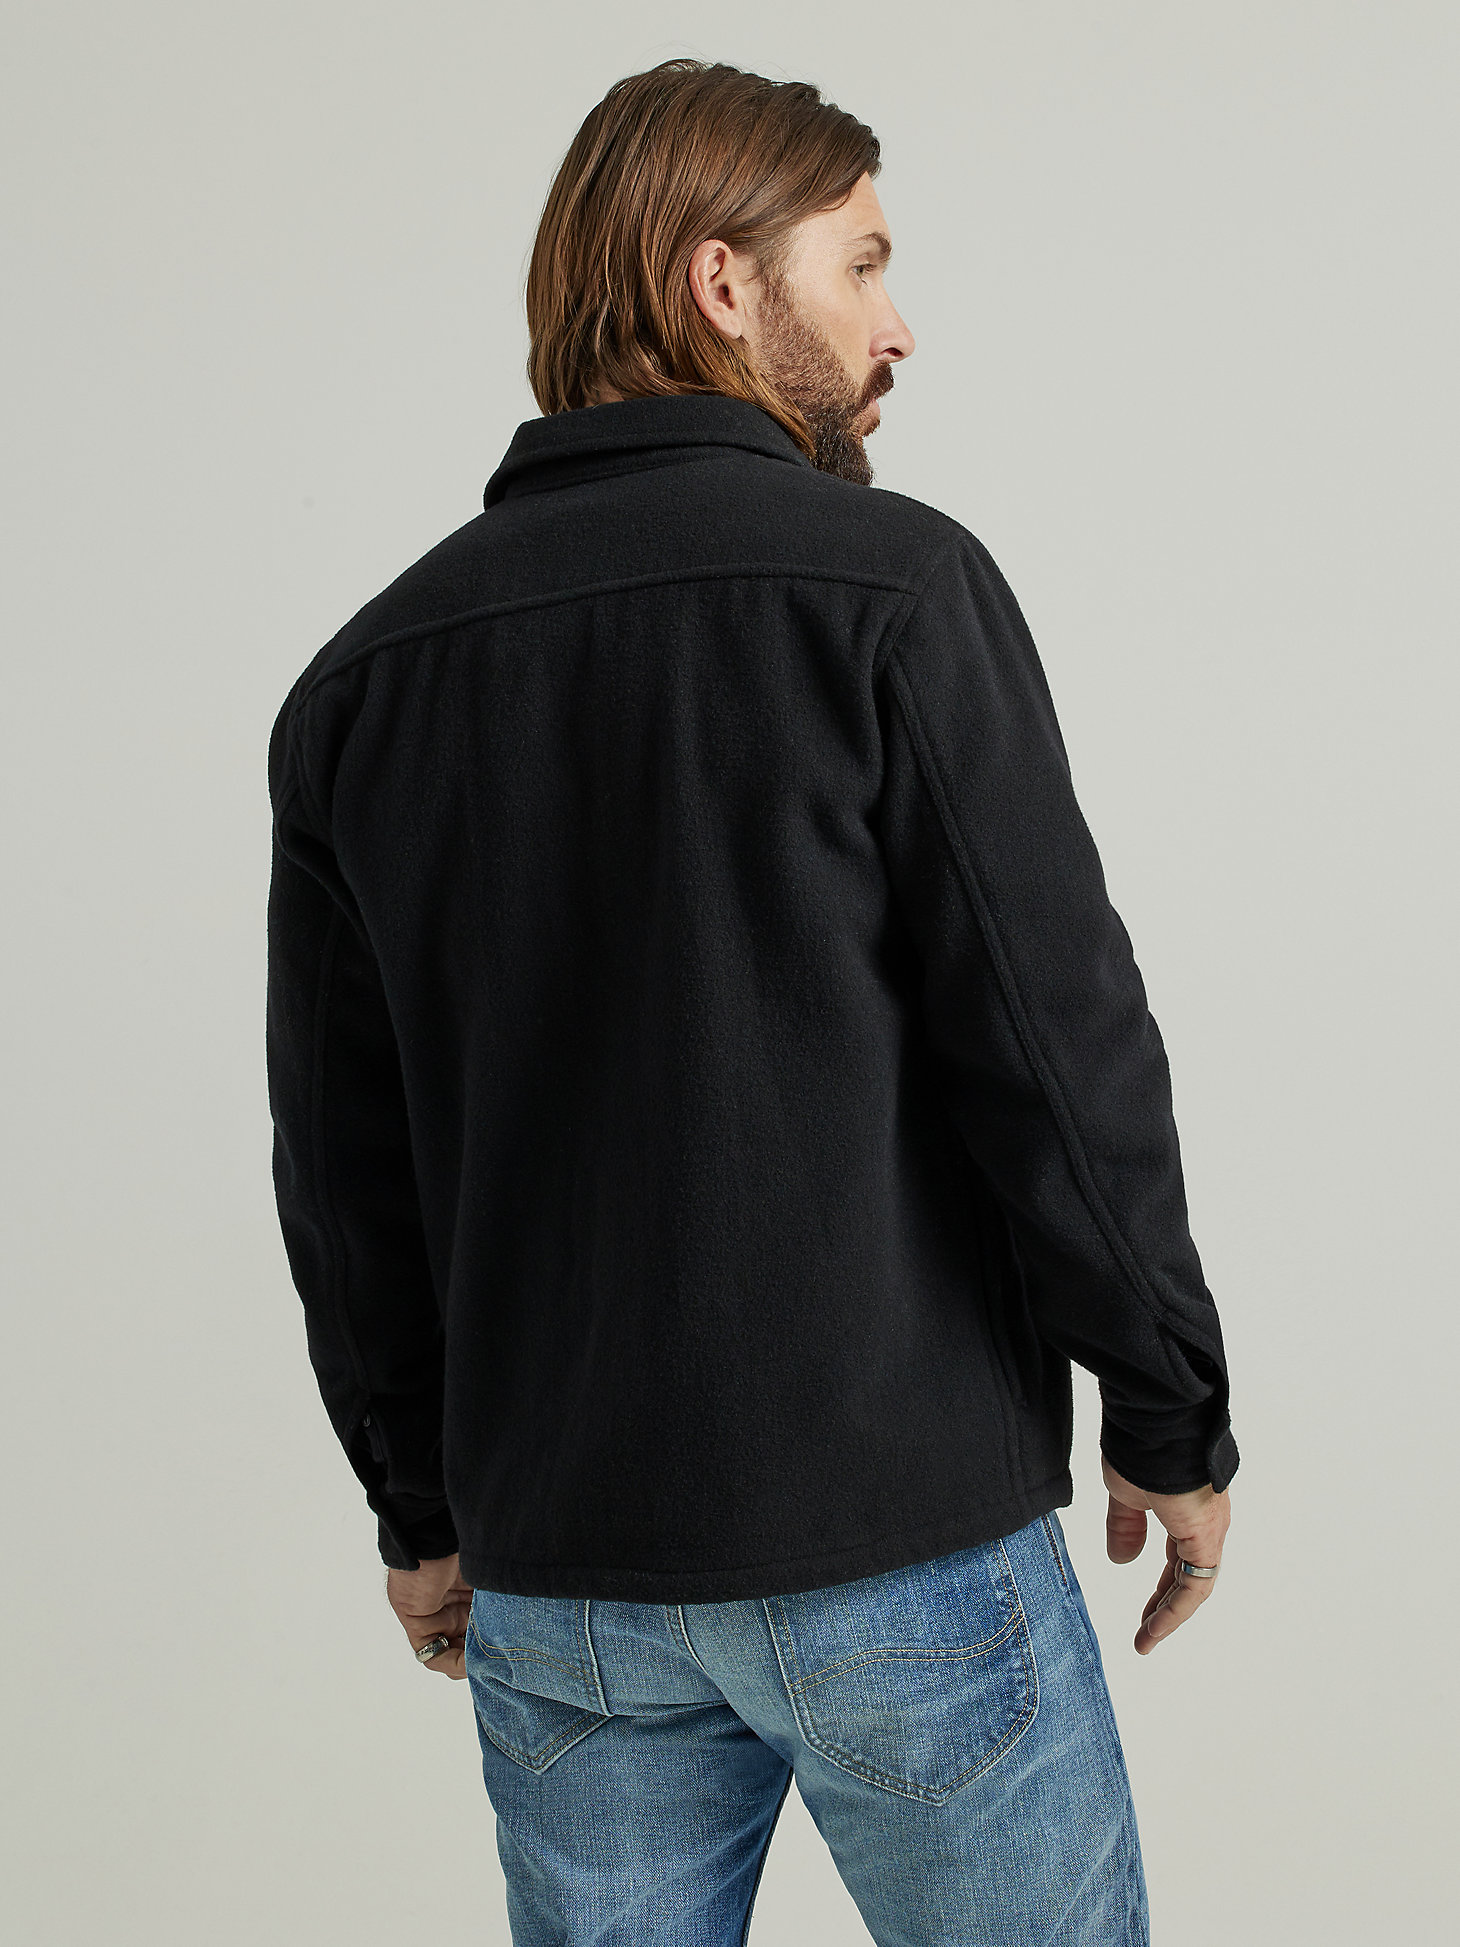 Men's Lee 101 Wool Overshirt in Washed Black alternative view 1